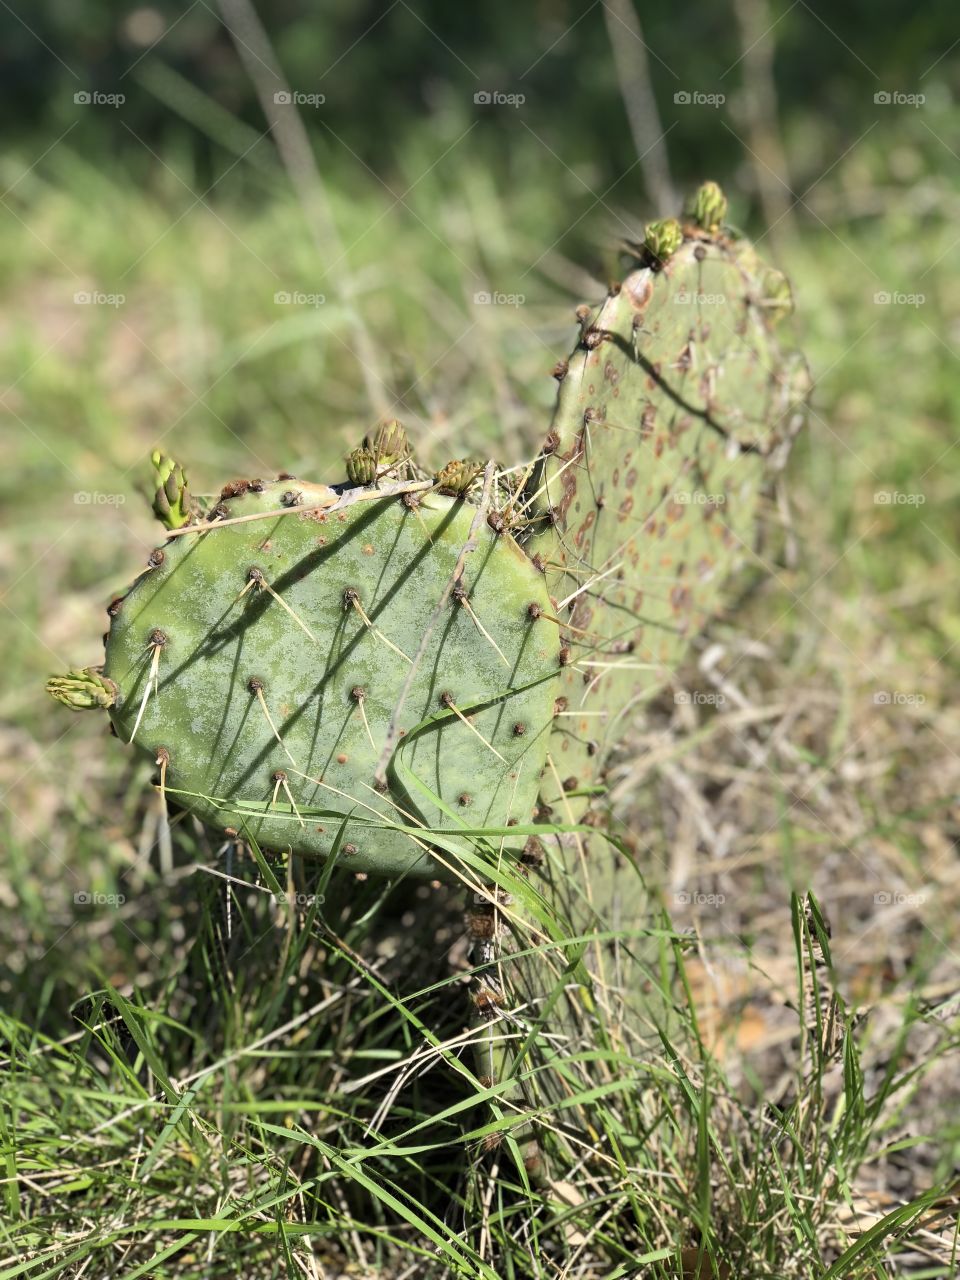 Heart of Cactus